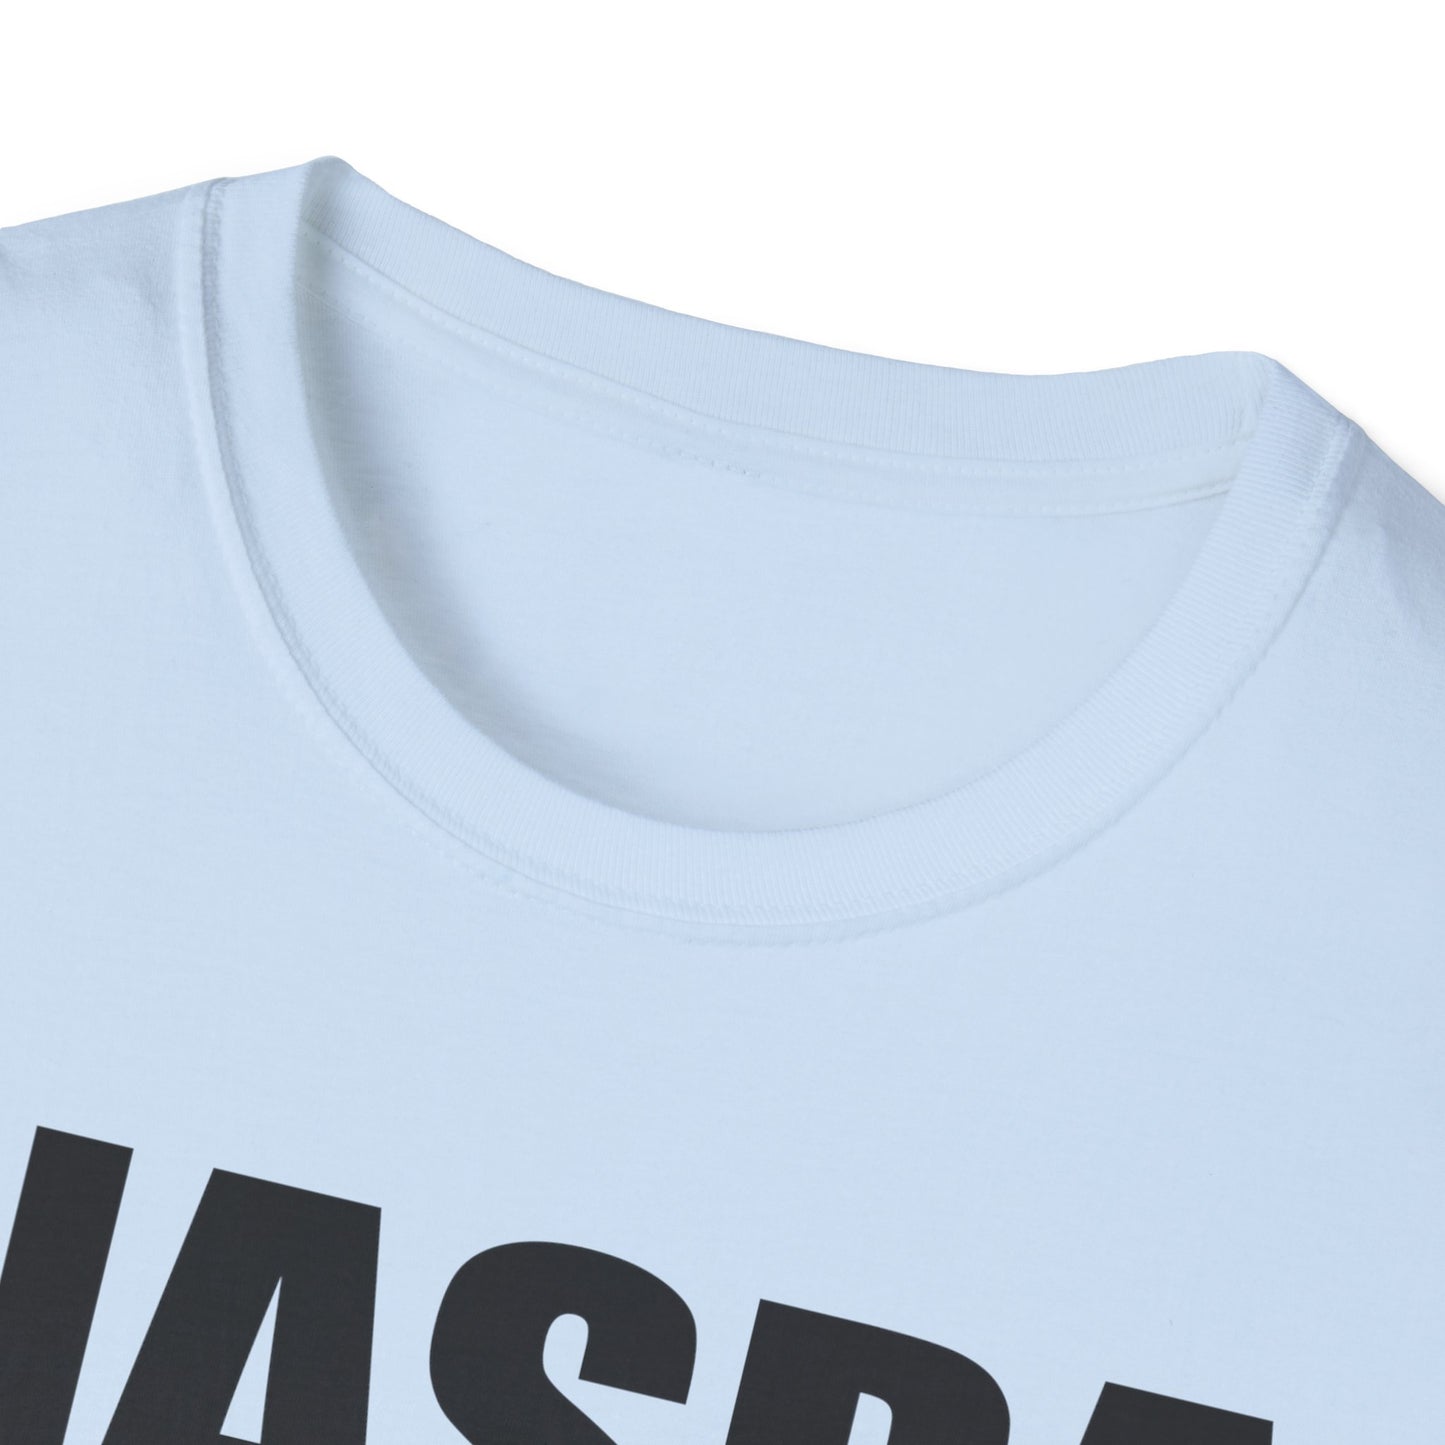 Synder  -  TEAM POODLE 2 - NASDA  Unisex Softstyle T-Shirt